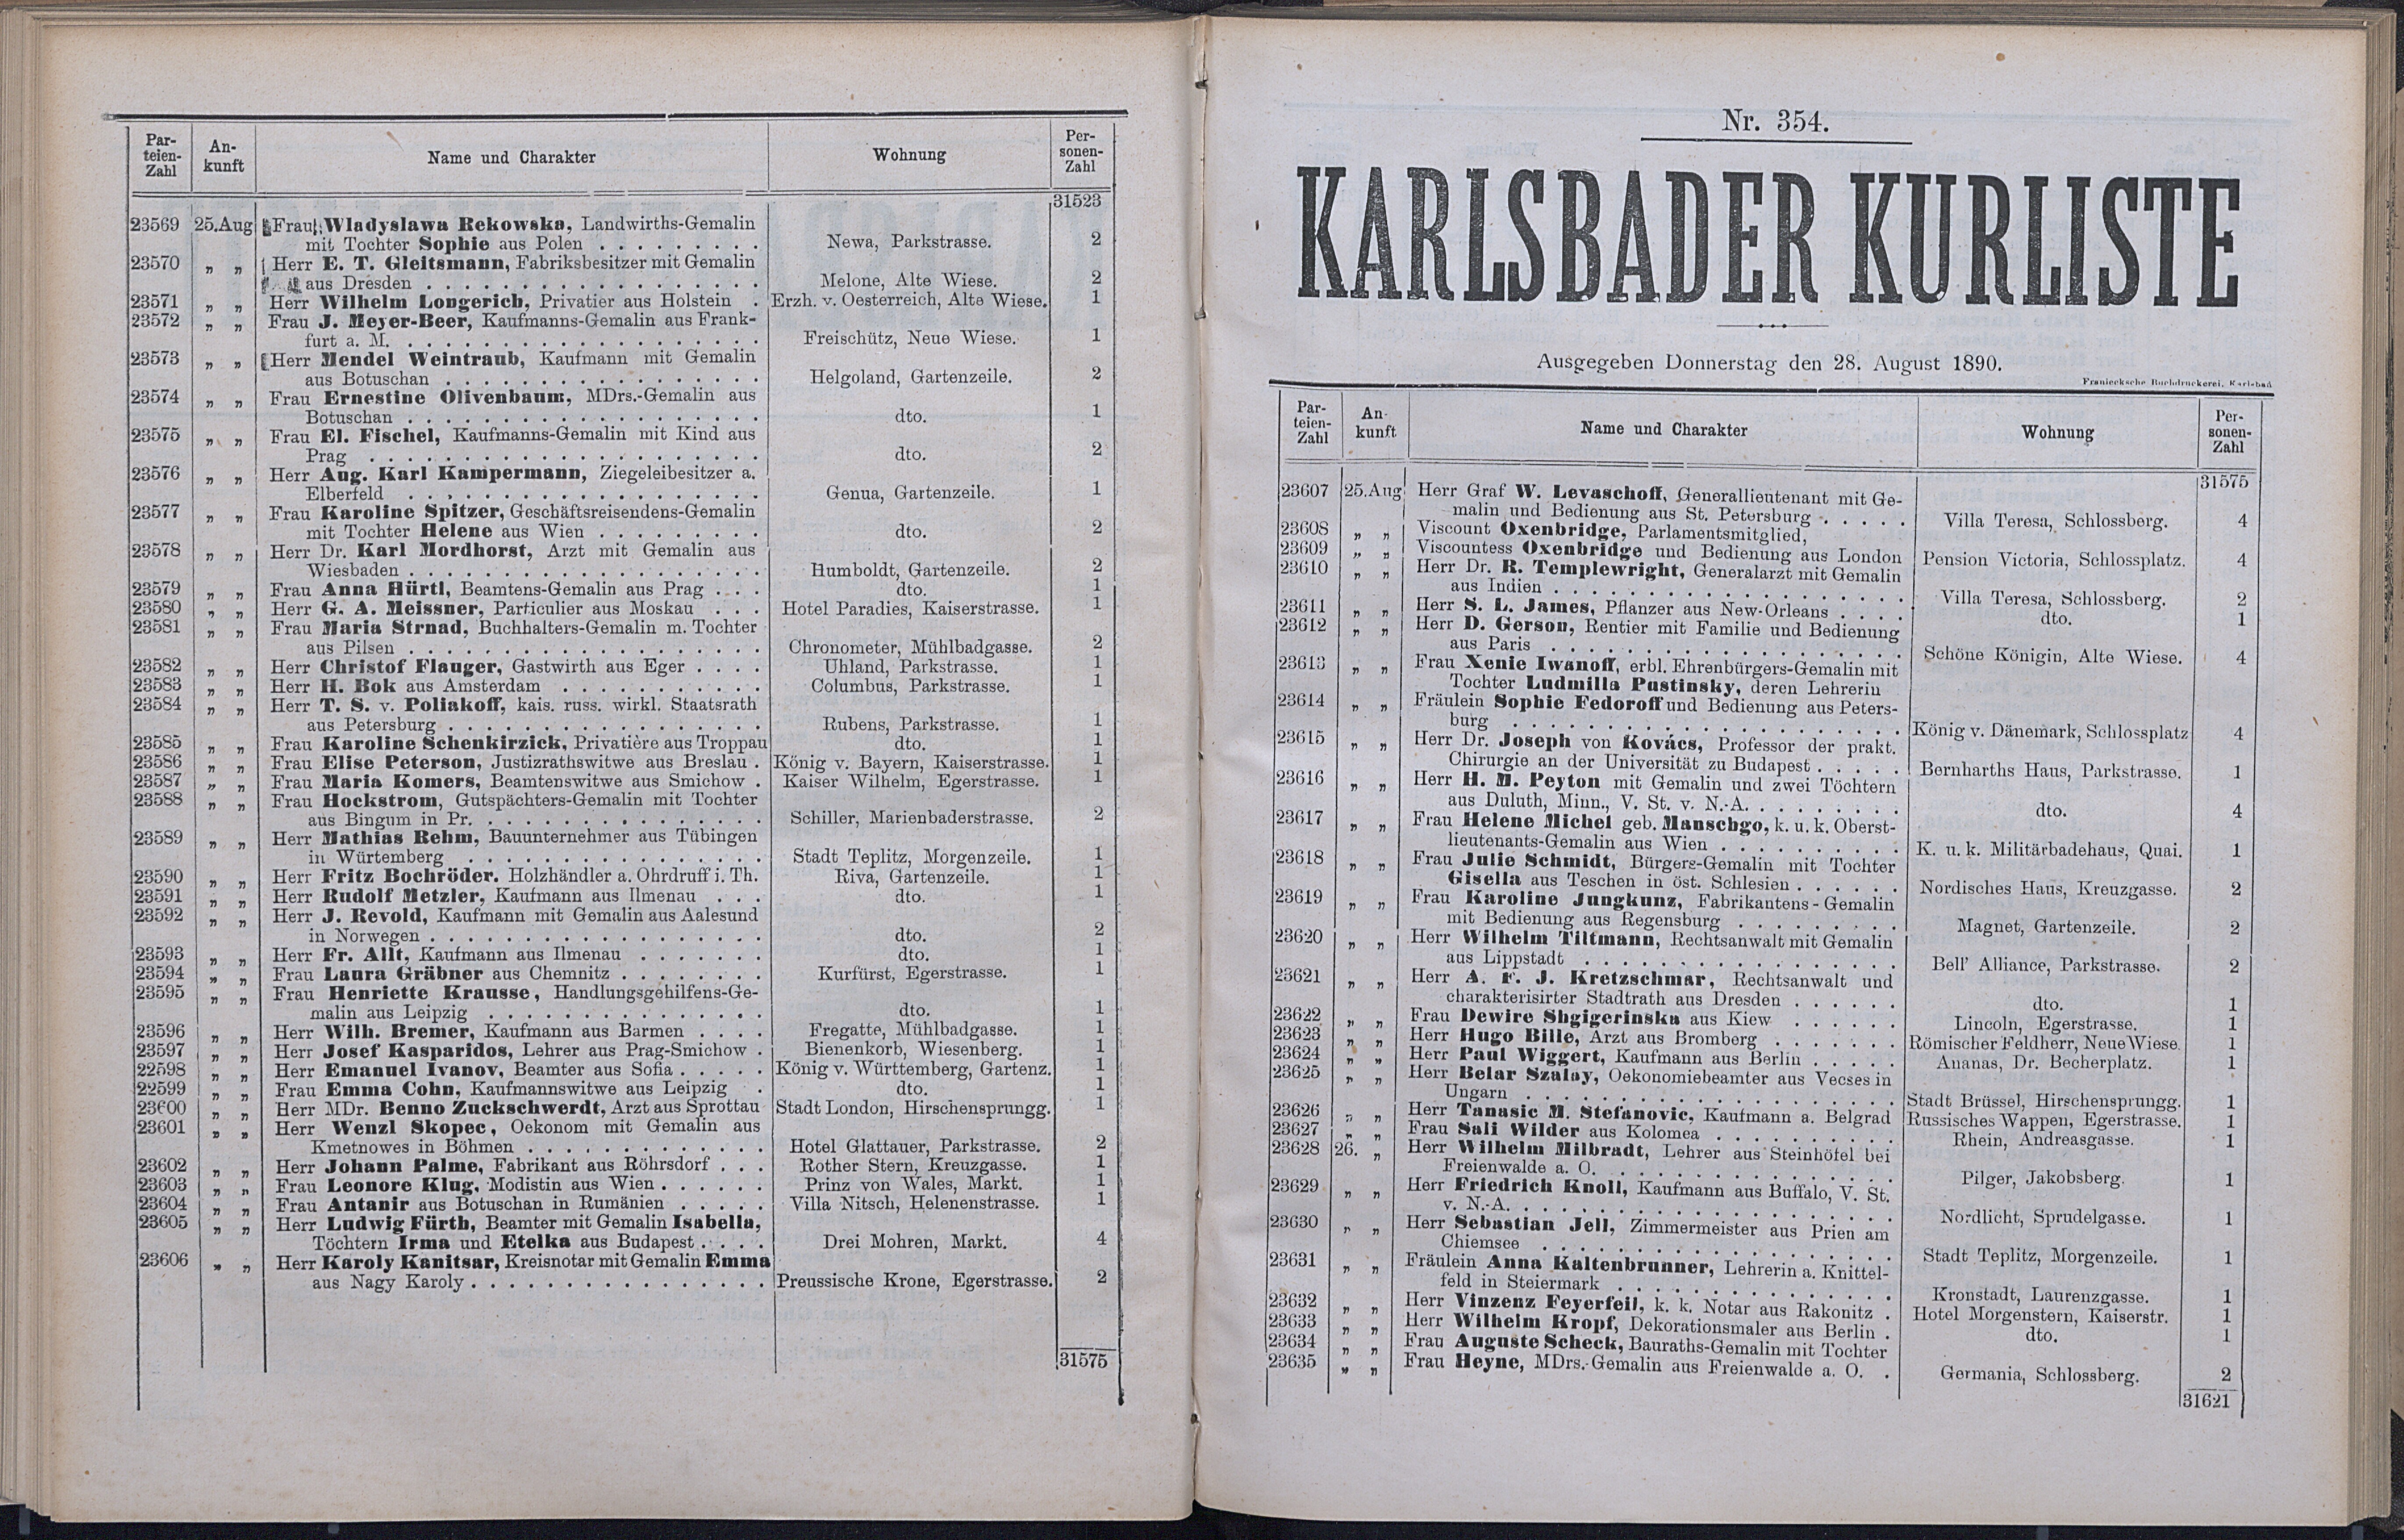 373. soap-kv_knihovna_karlsbader-kurliste-1890_3740